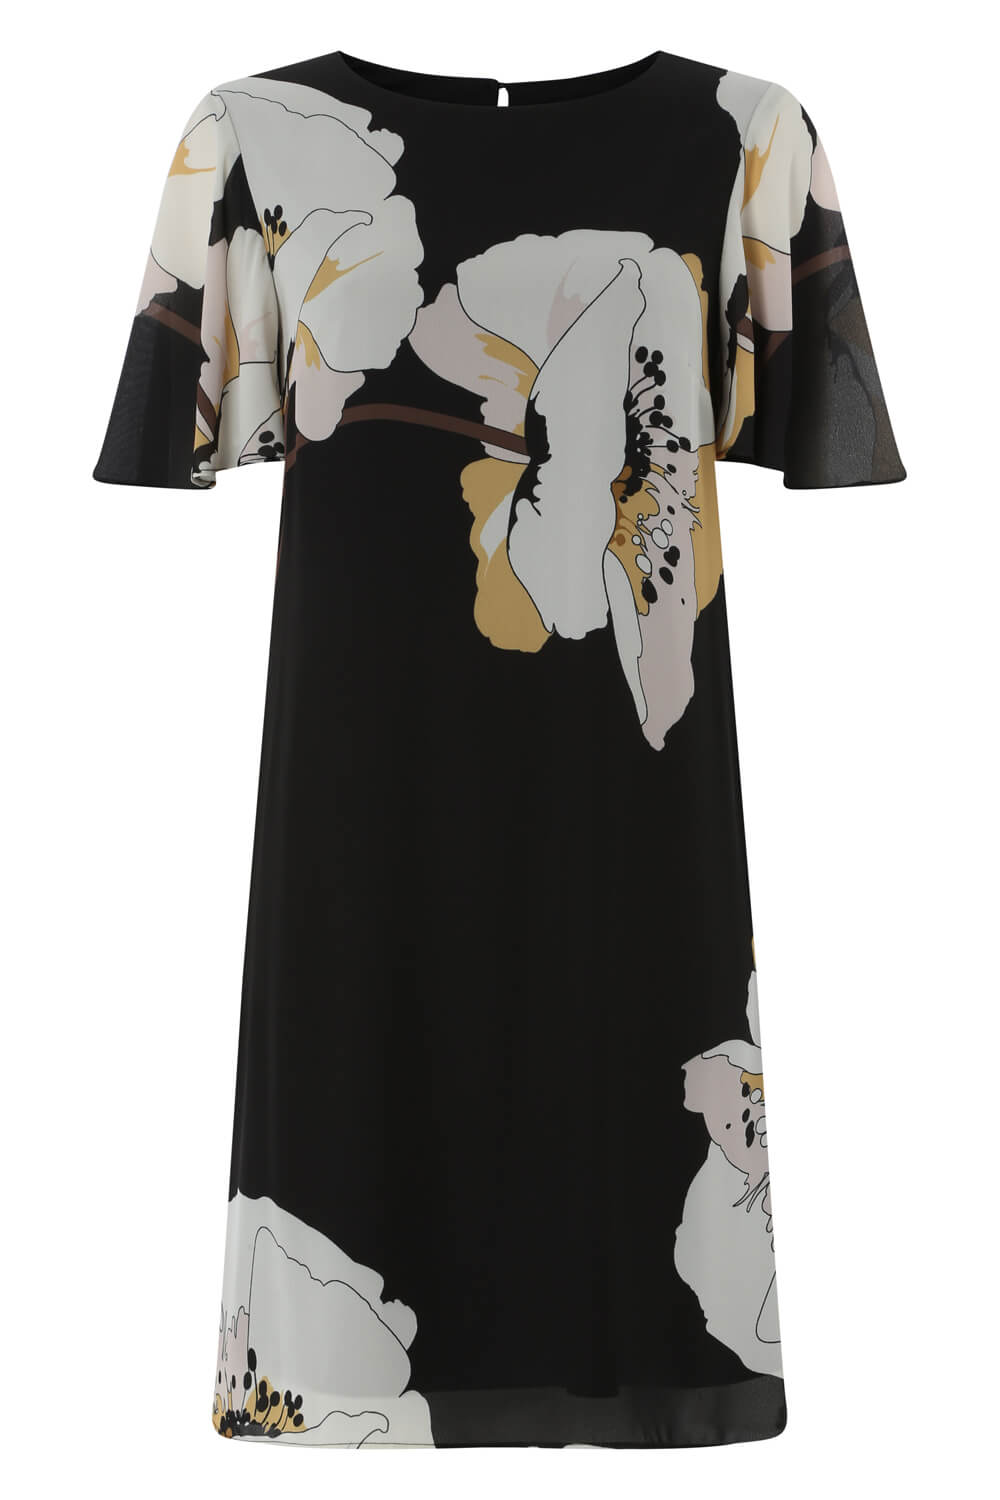 Black Floral Print Chiffon T-Shirt Dress, Image 4 of 4